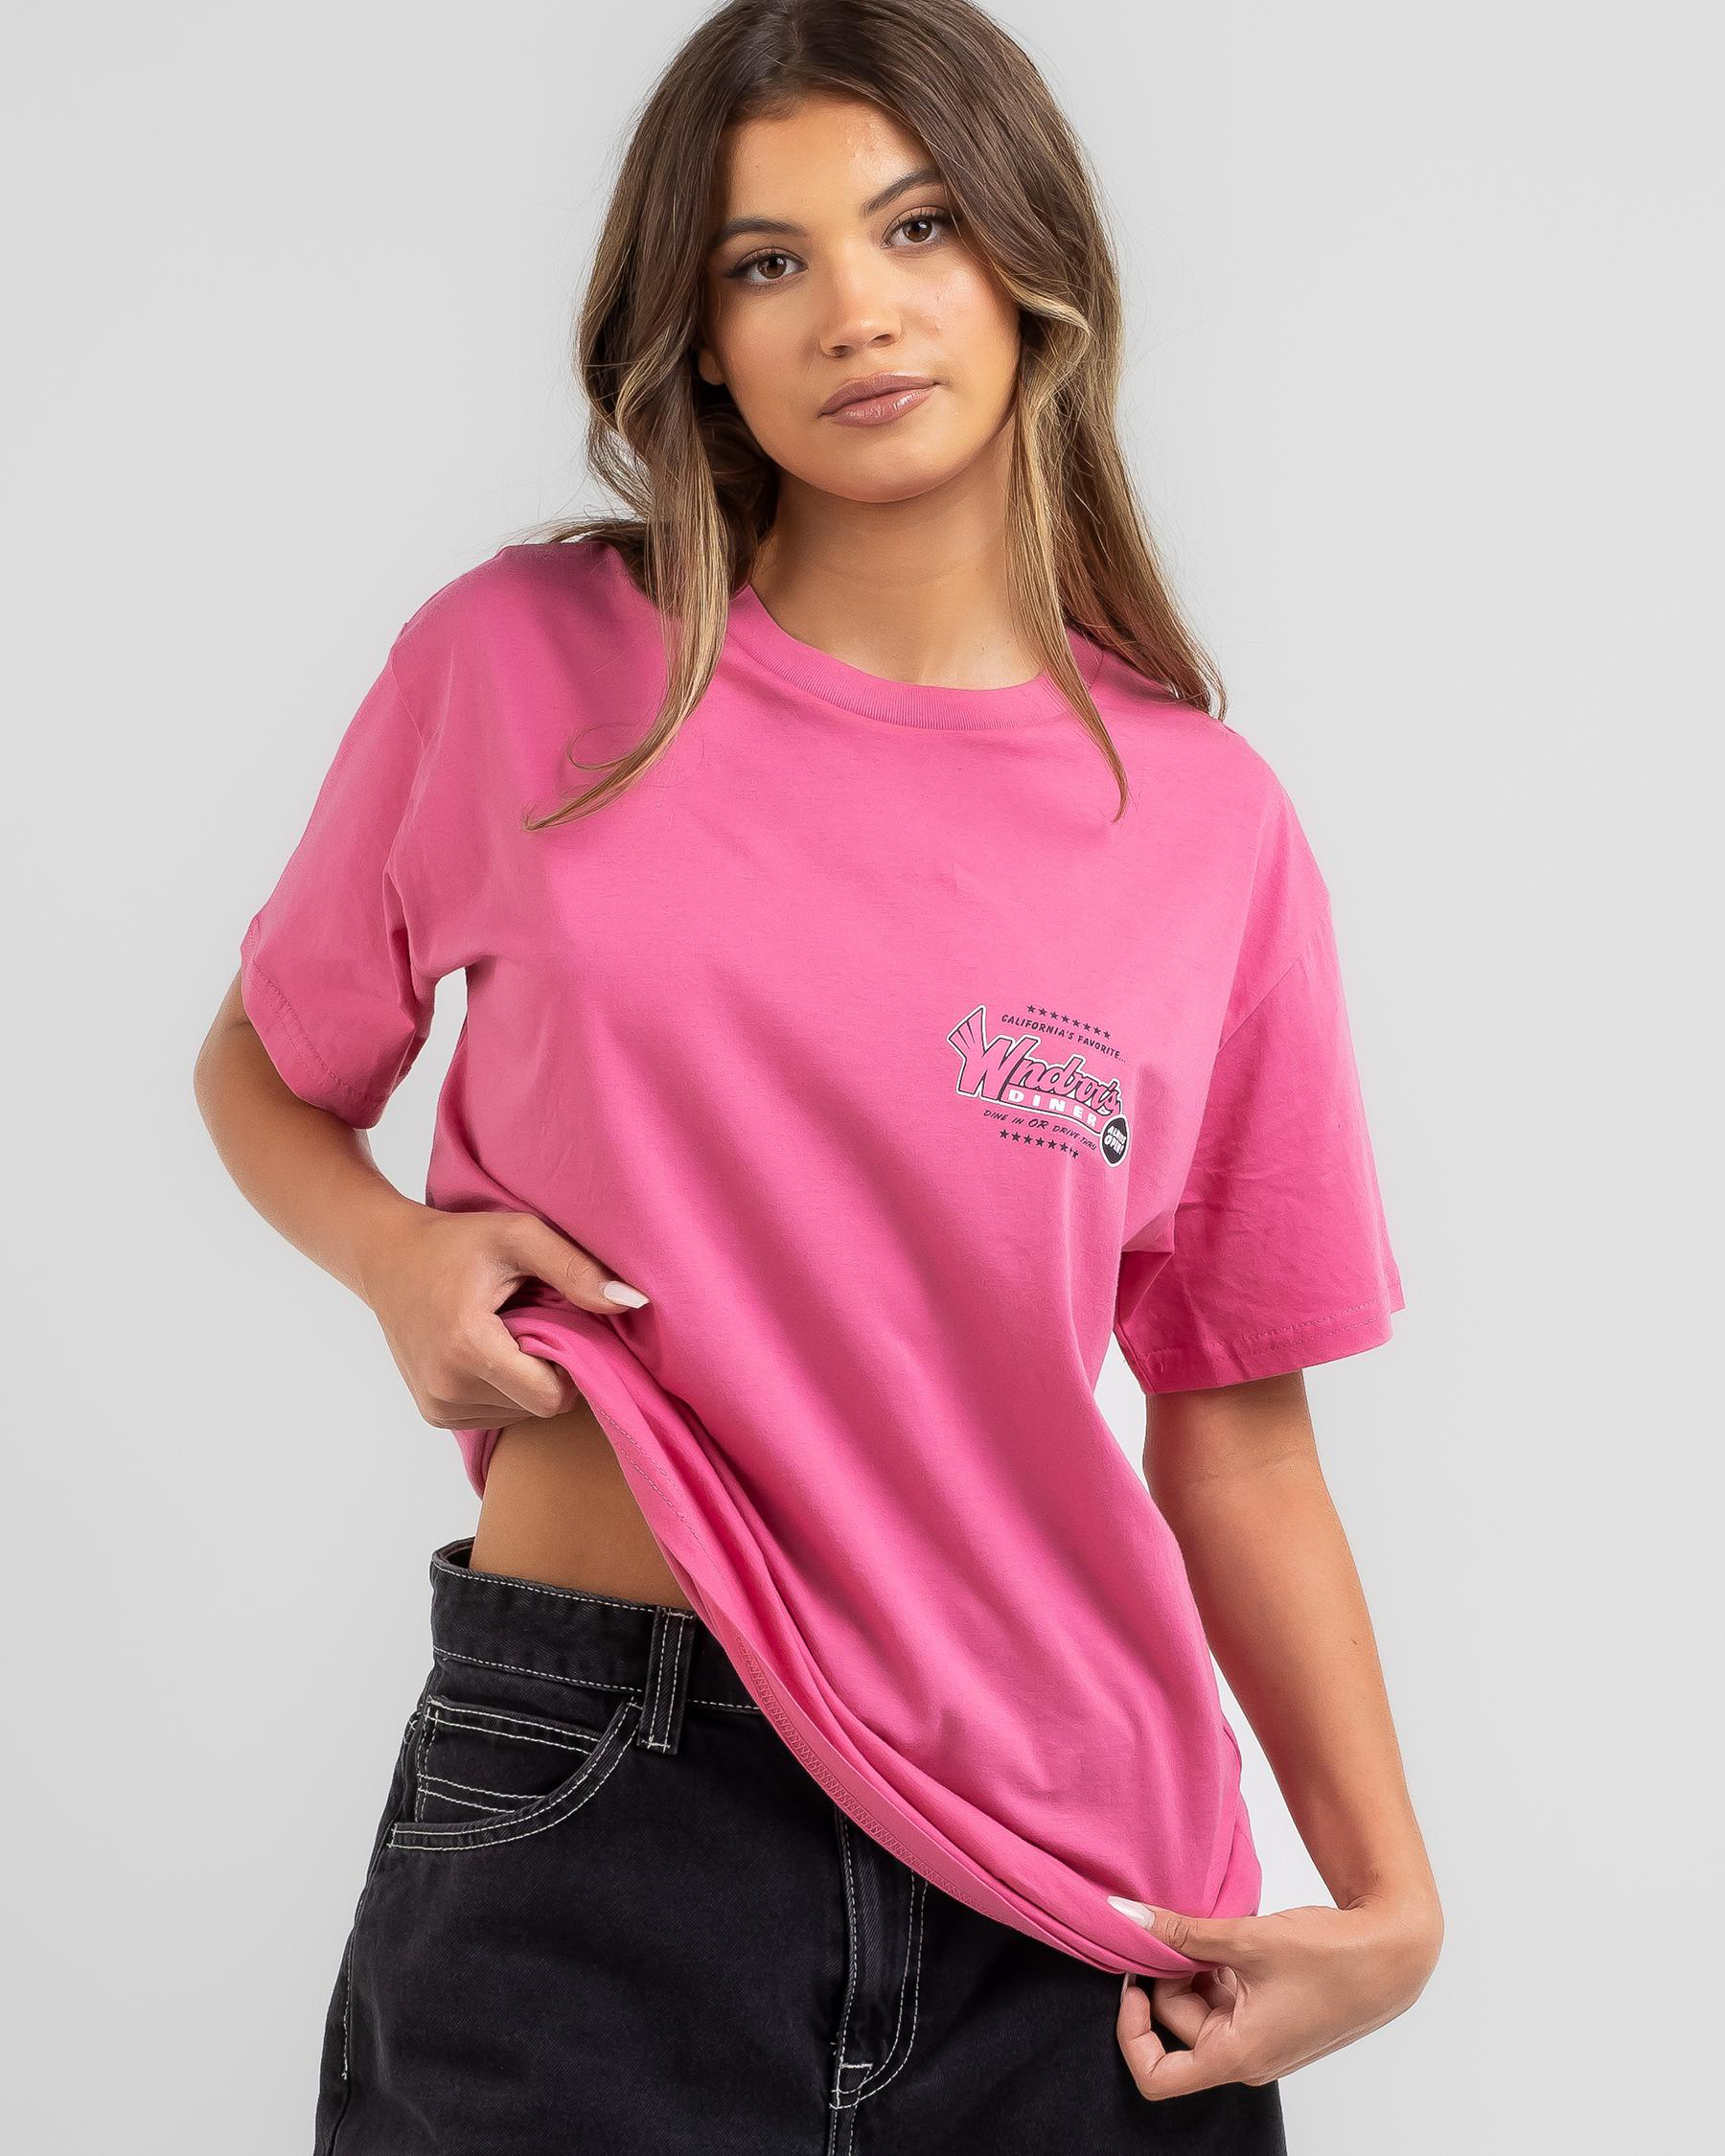 Wndrr Drive-Thru T-Shirt In Pink - Fast Shipping & Easy Returns - City ...